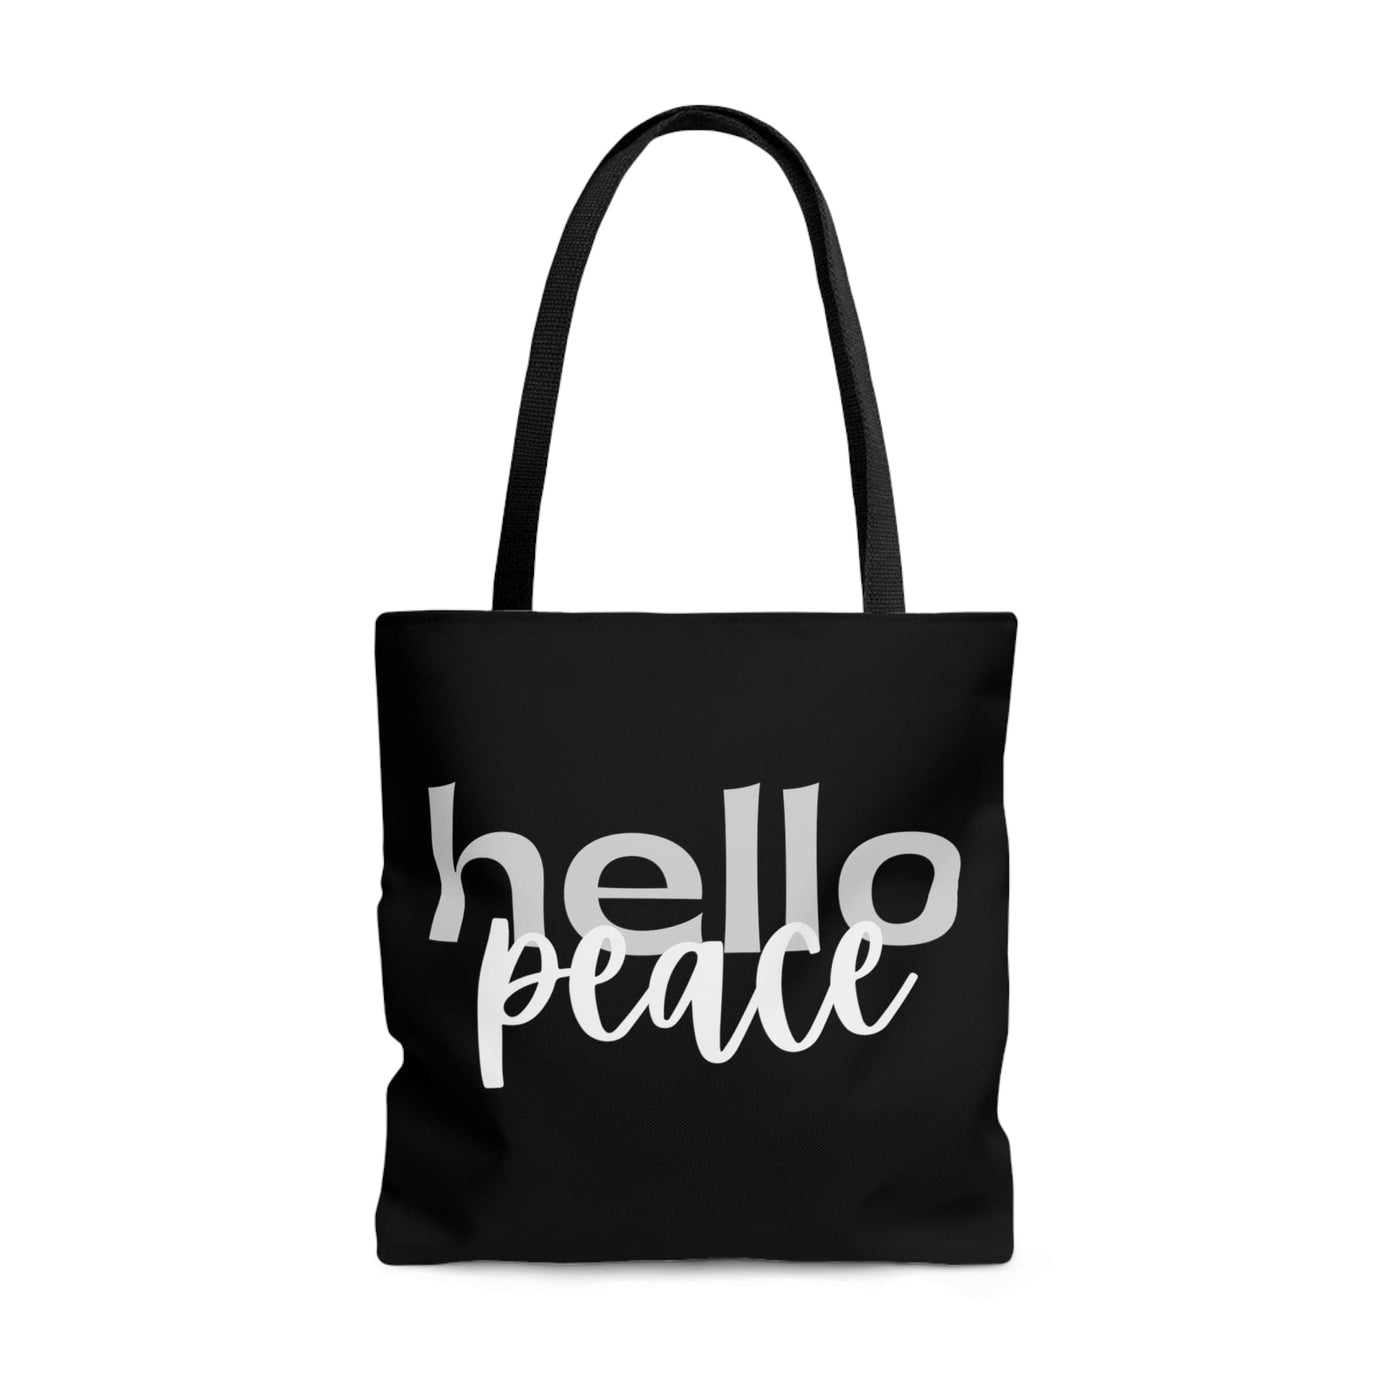 Canvas Tote Bag Hello Peace Motivational Peaceful Aspiration - Grey/white